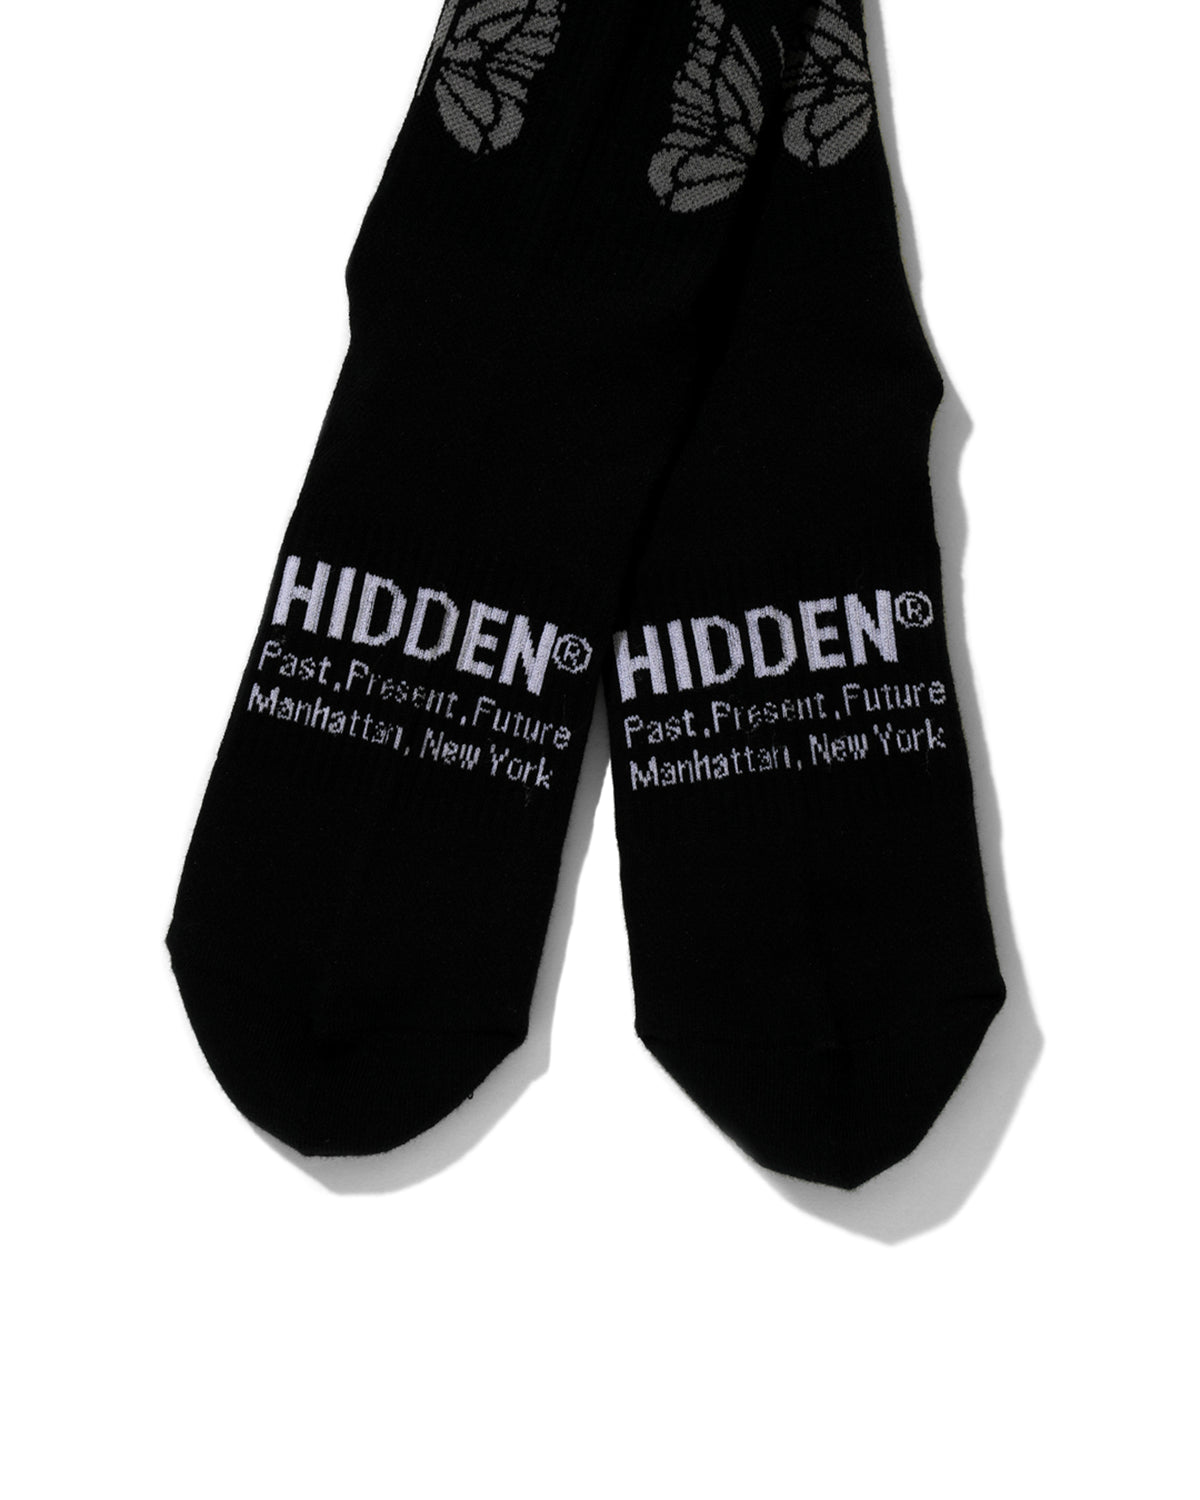 Needles x Hidden Jacquard Socks - Black/White/Grey